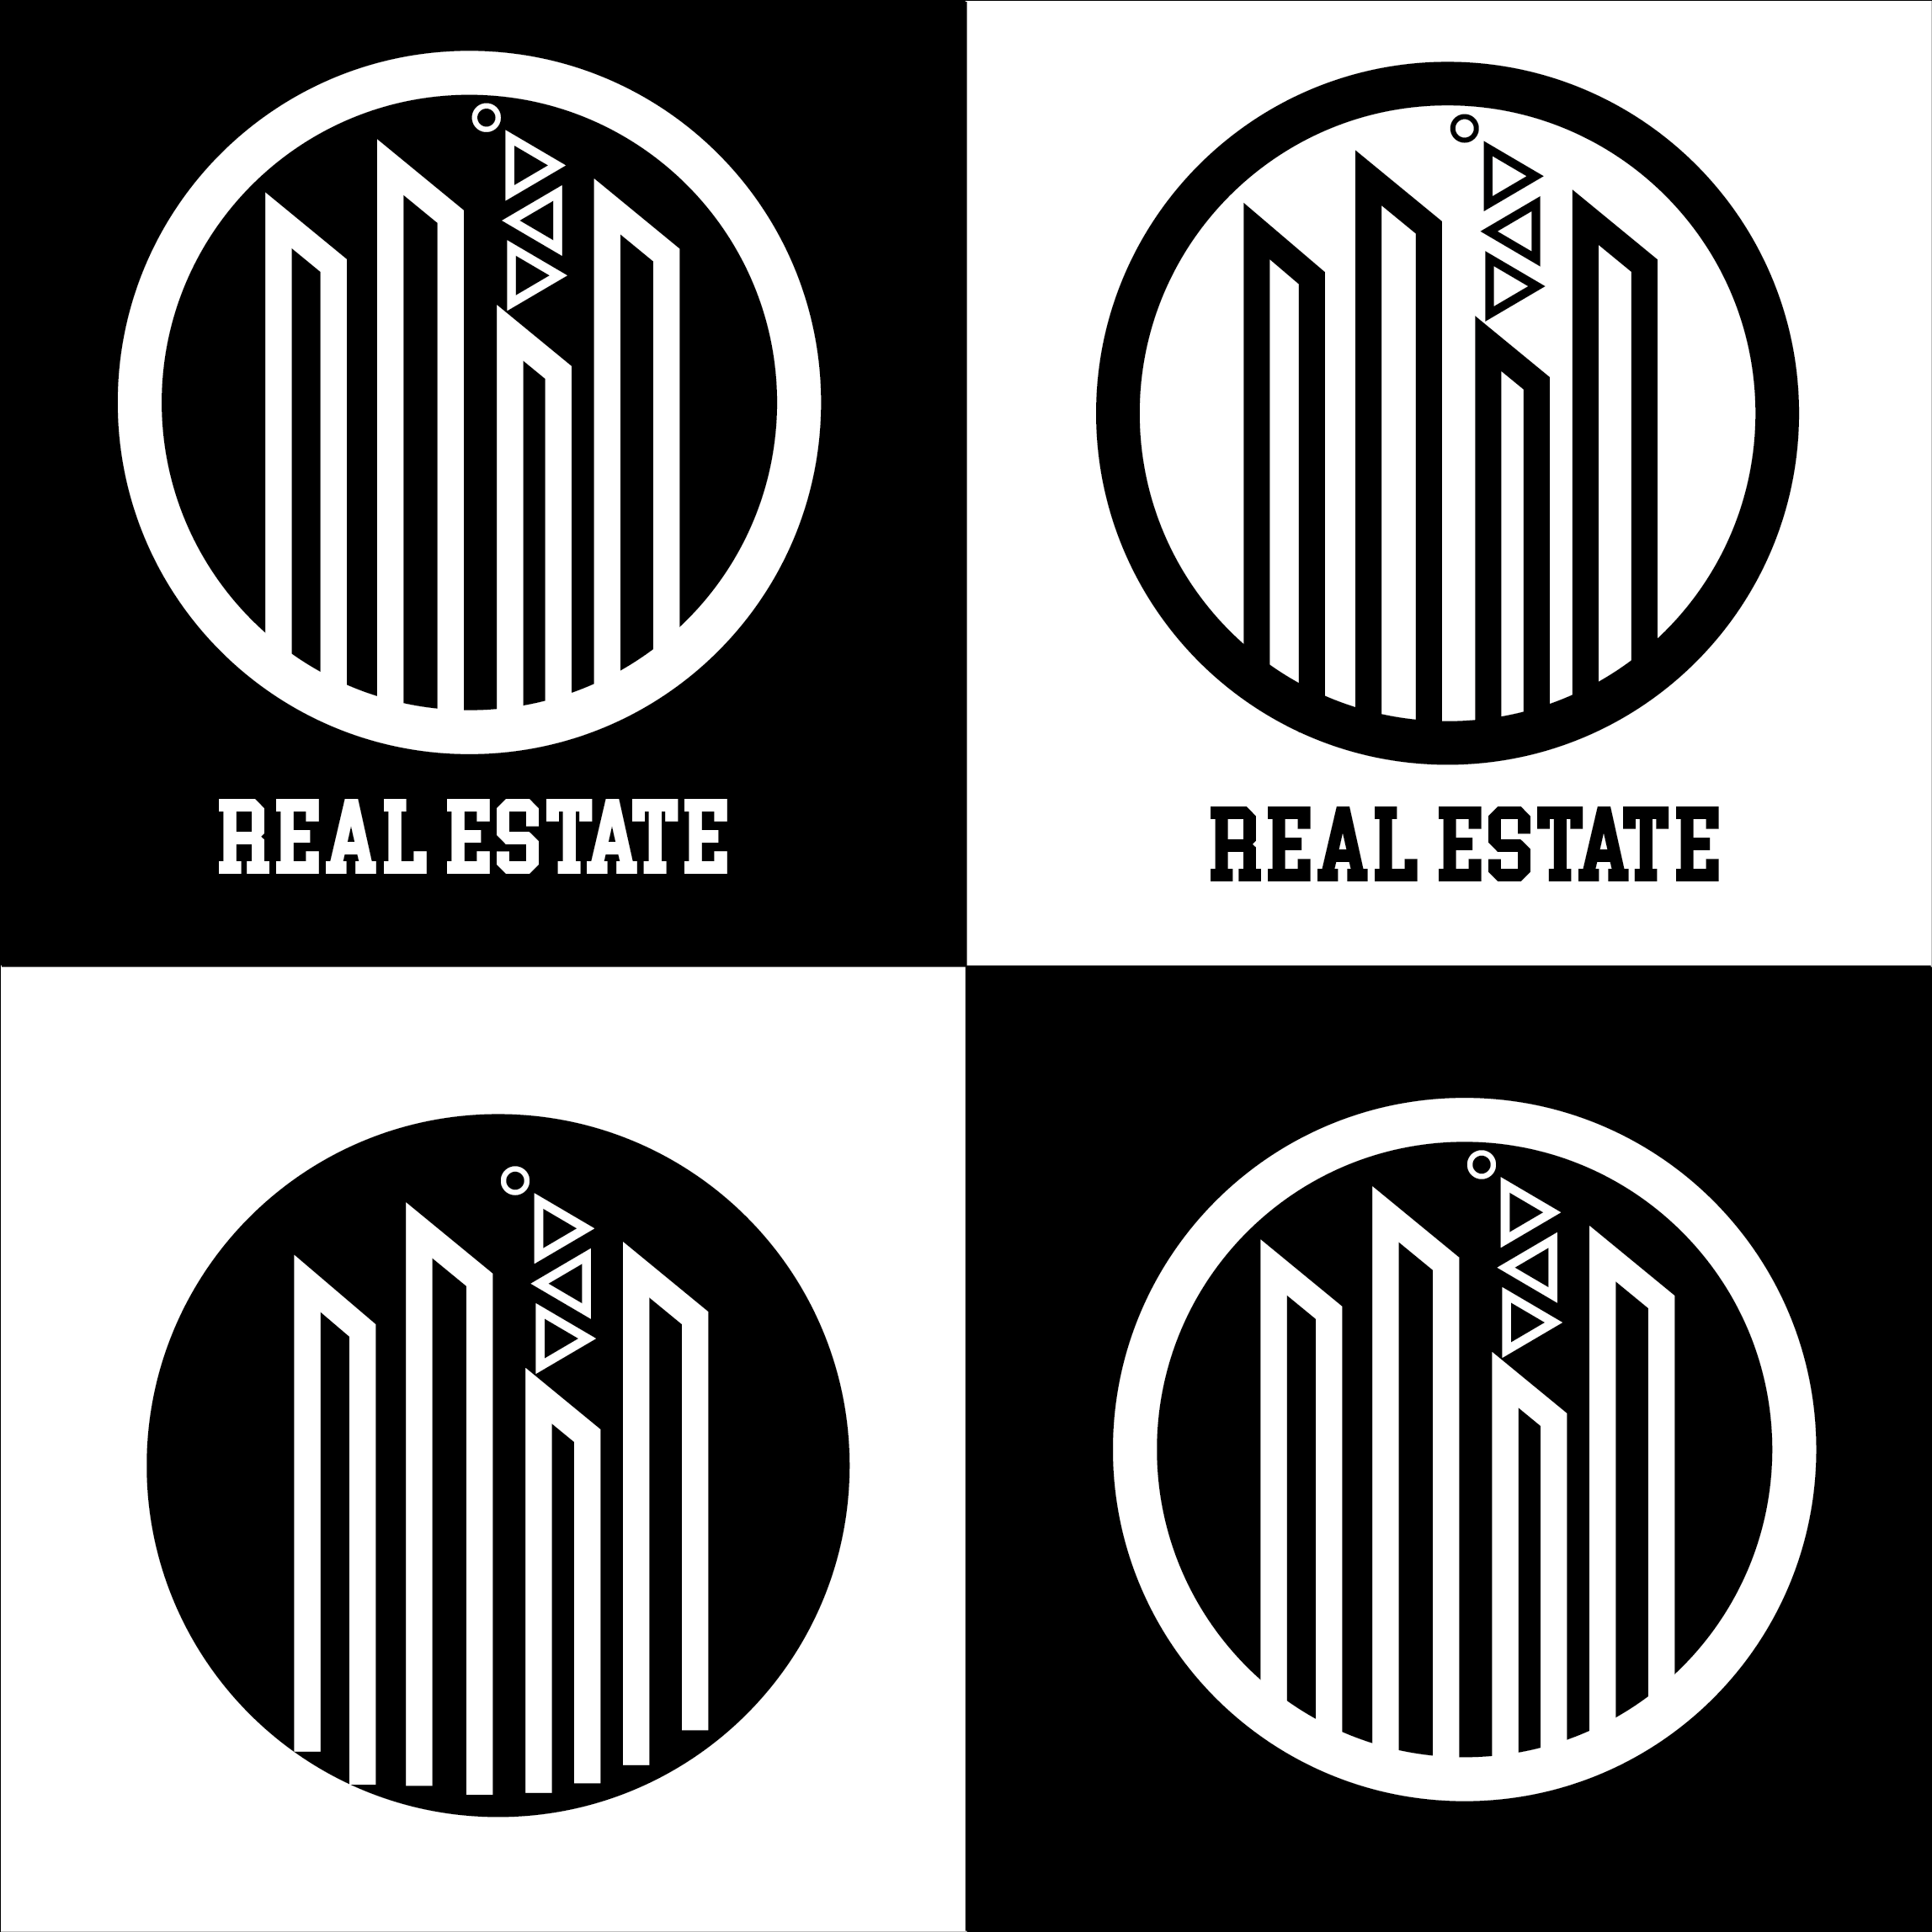 Real Estate logo design | Logo design preview image.